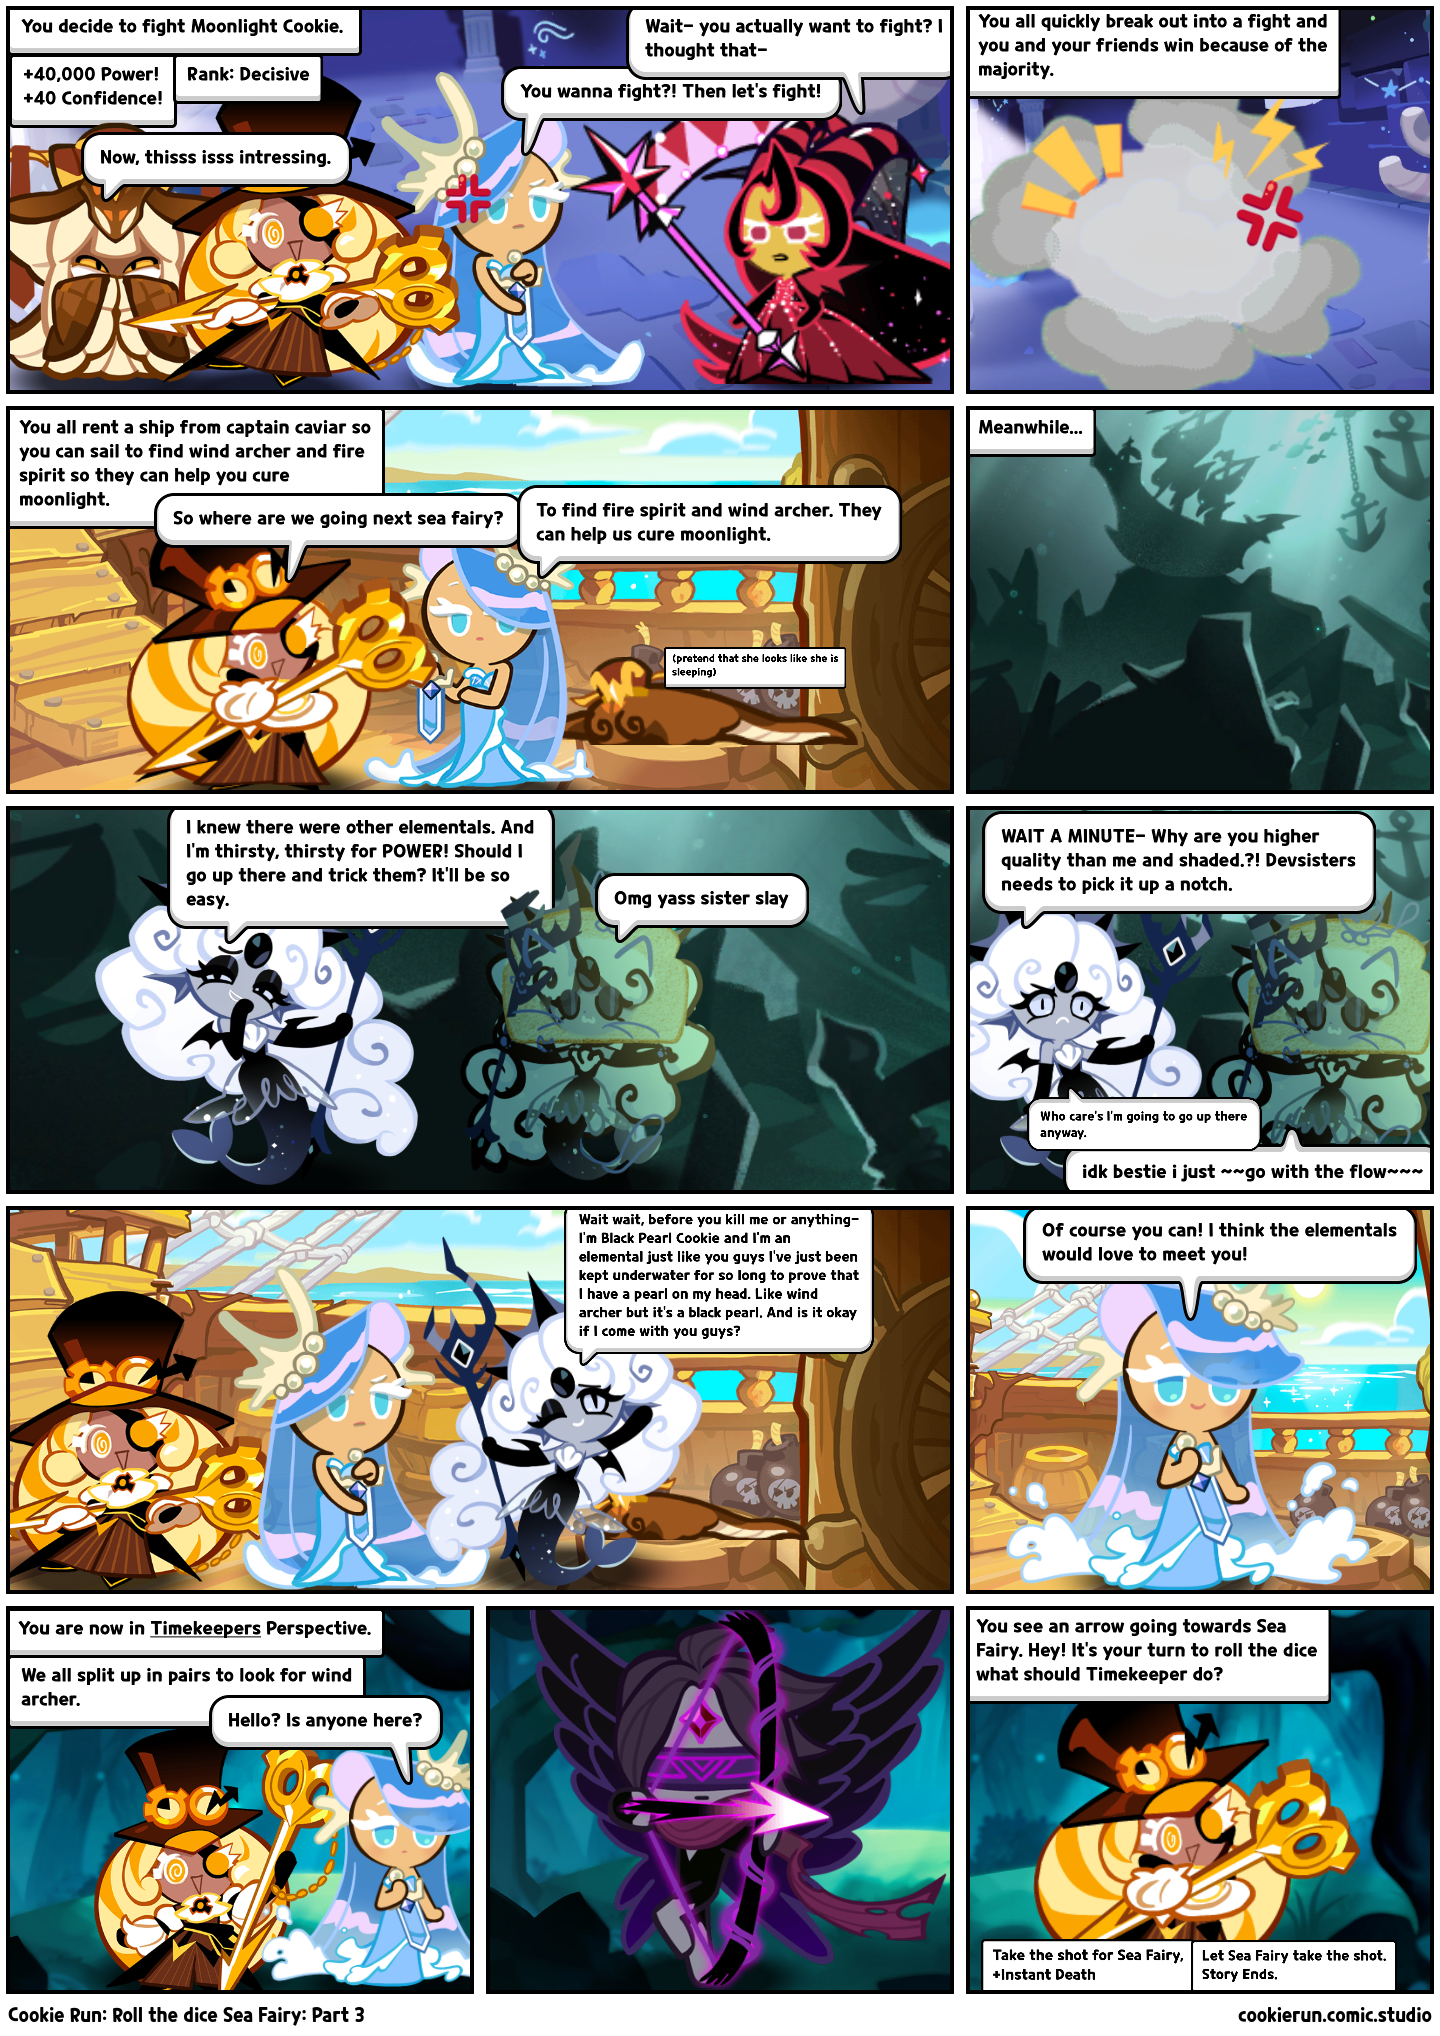 Cookie Run: Roll the dice Sea Fairy: Part 3